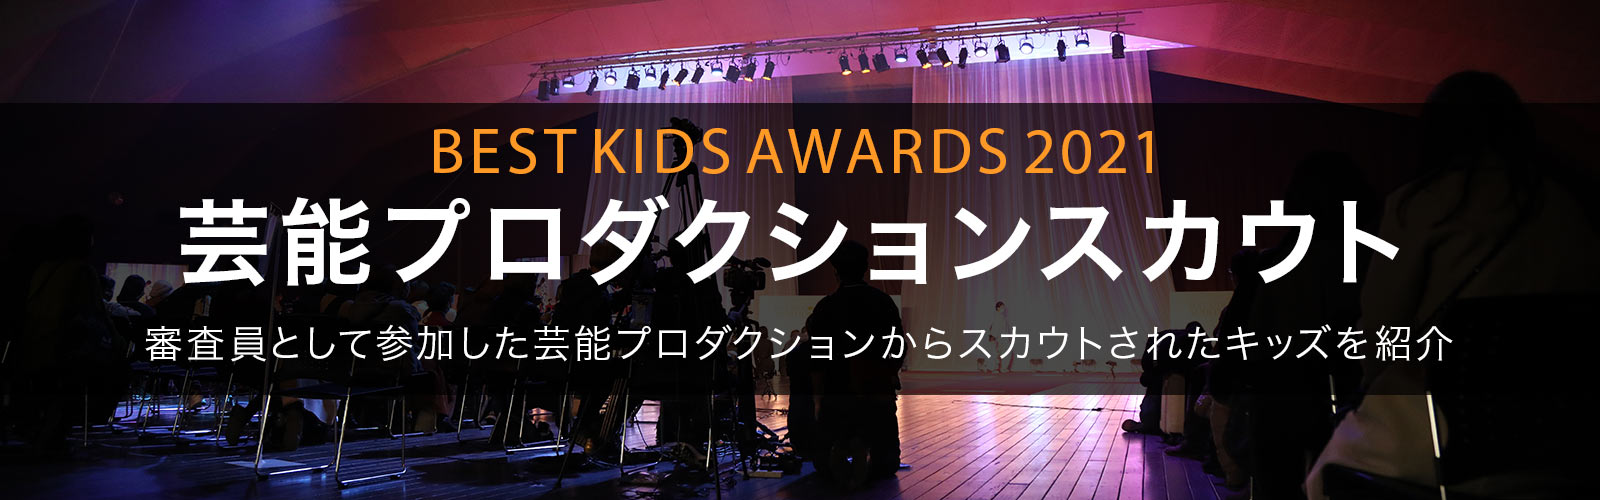 BEST KIDS AUDITION 2021芸能プロダクションスカウト